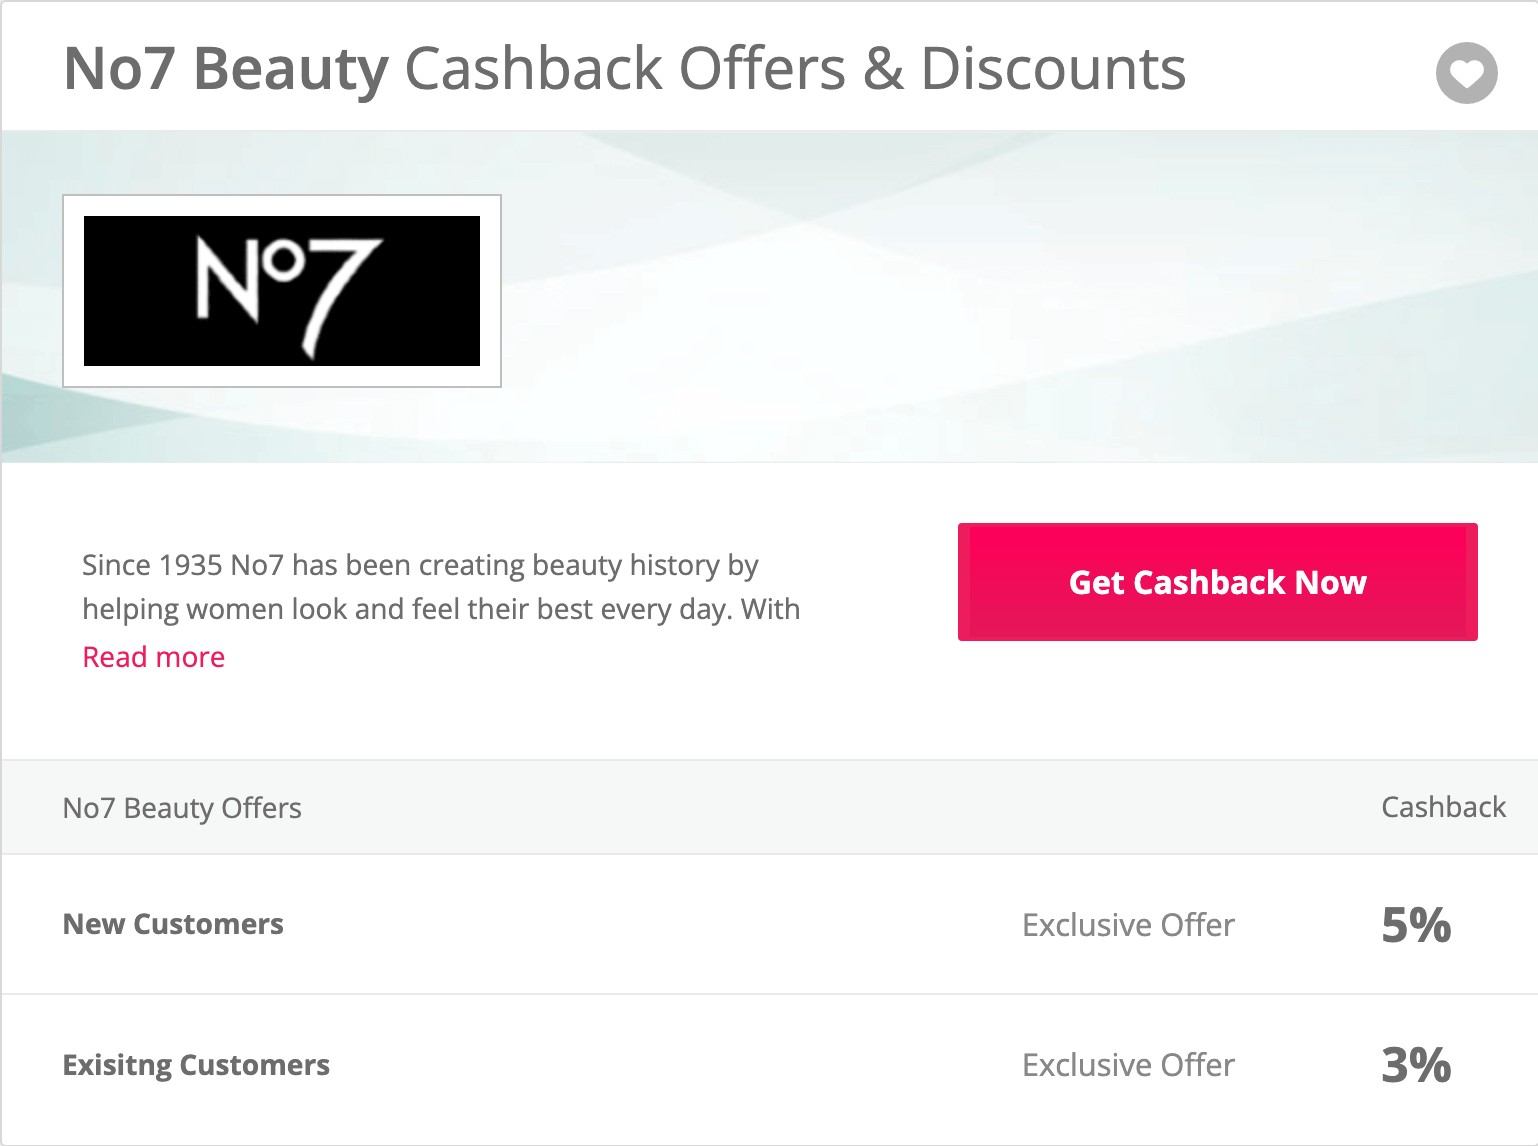 No7 Beauty Cashback Offers & Discounts